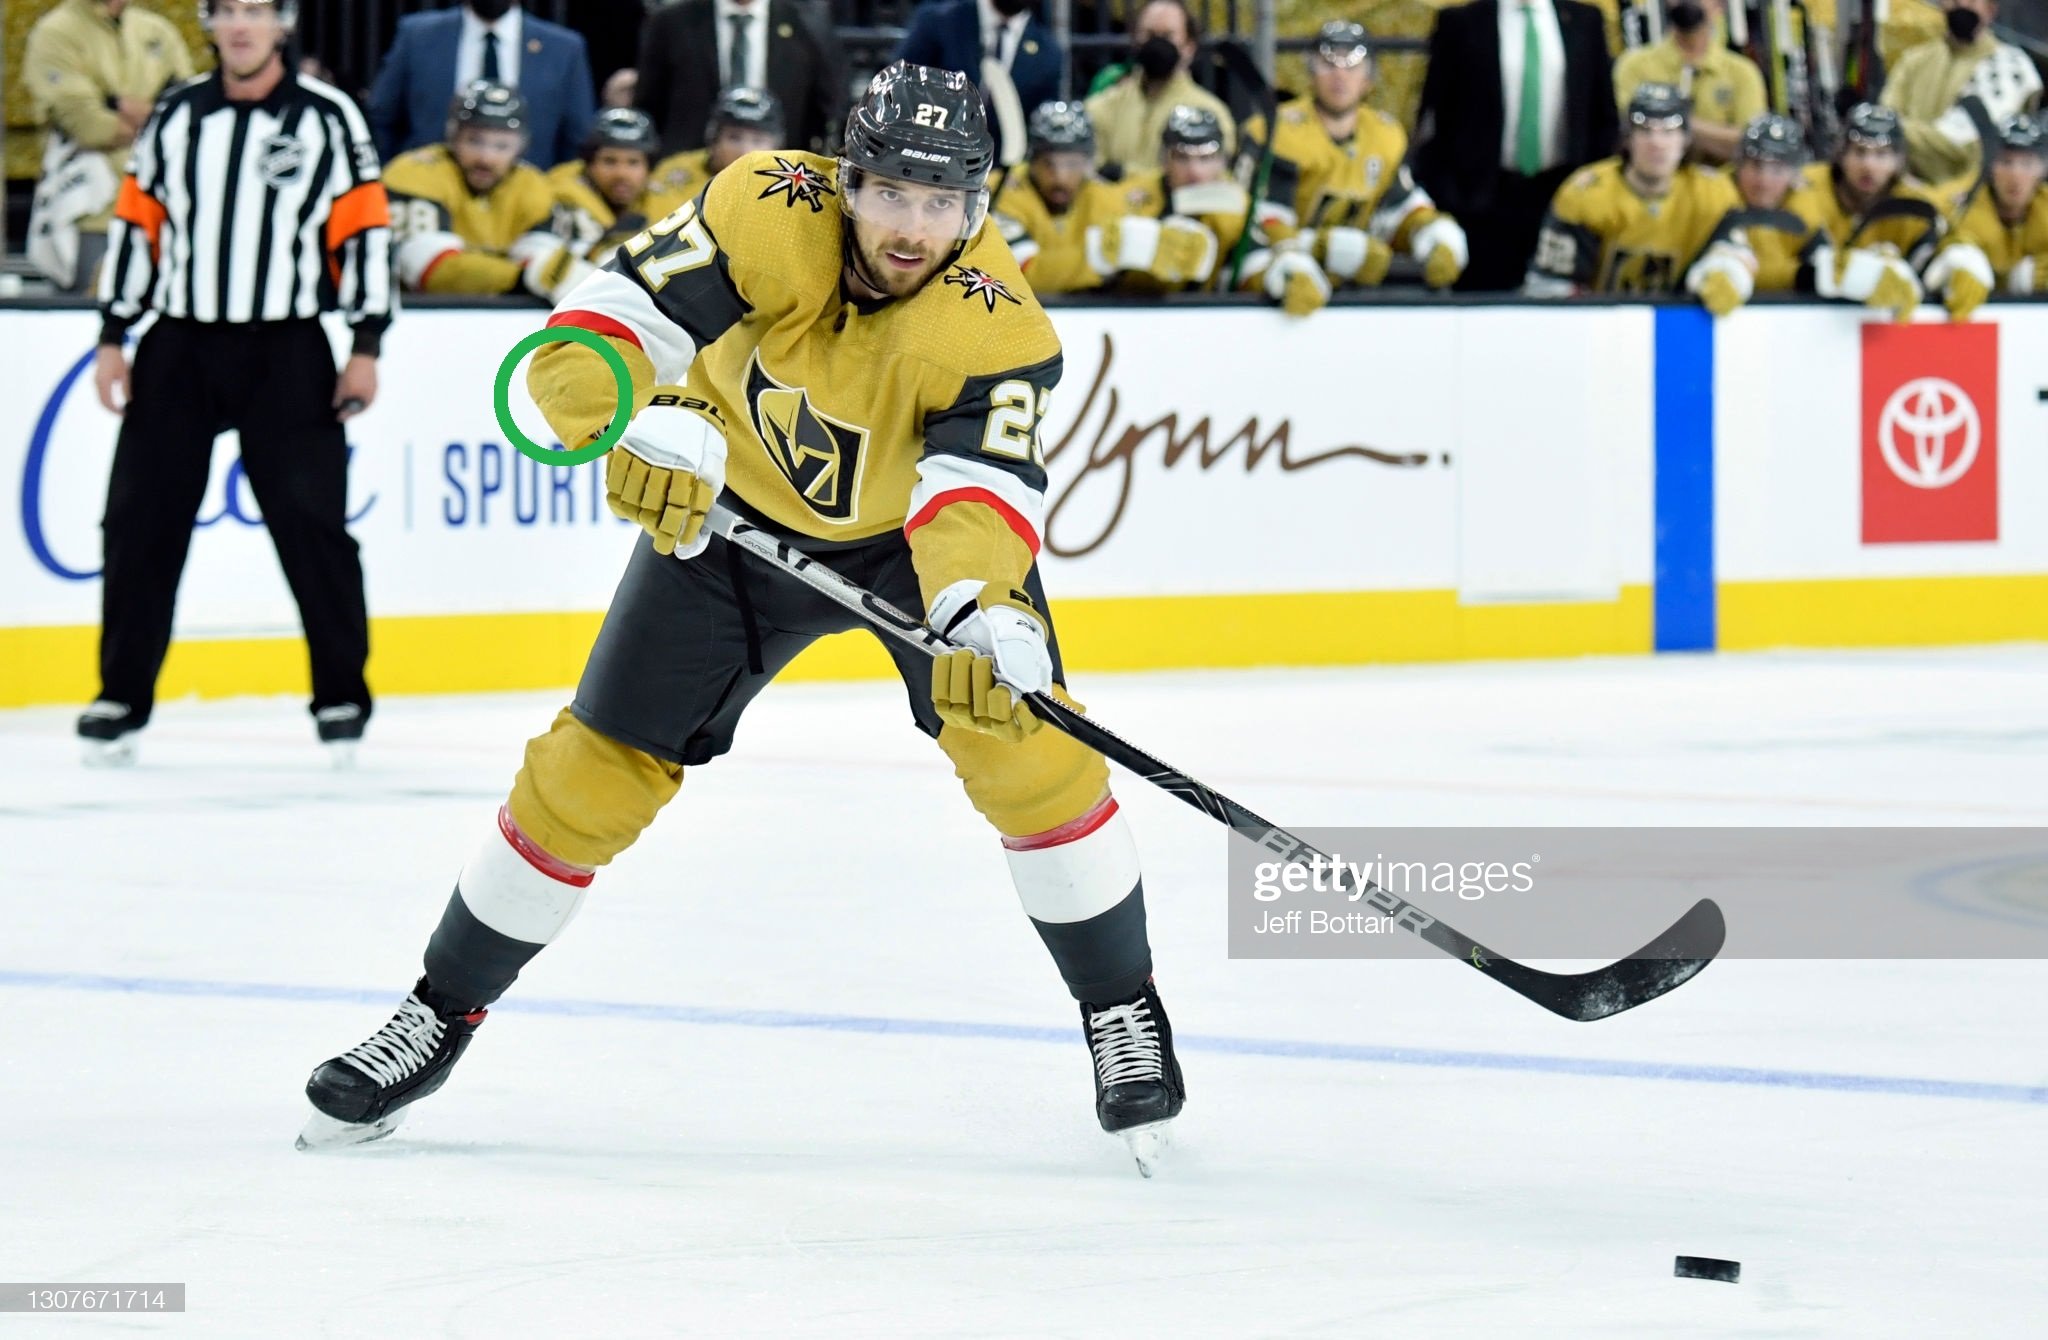 Shea Theodore Vegas Golden Knights Adidas Authentic Away NHL Hockey Je